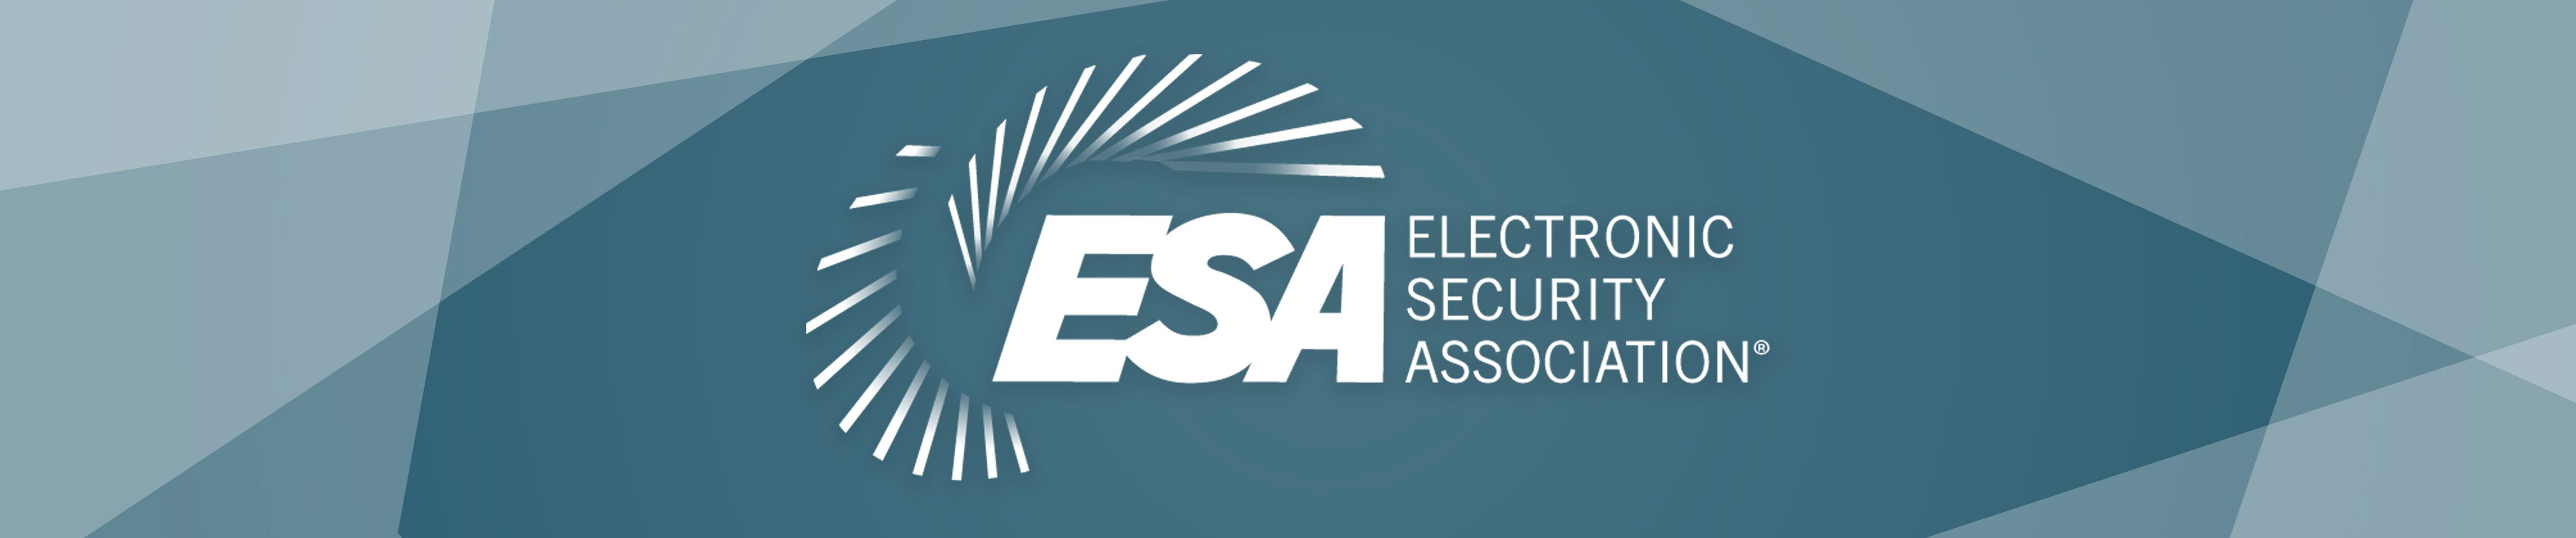 electronic-security-association